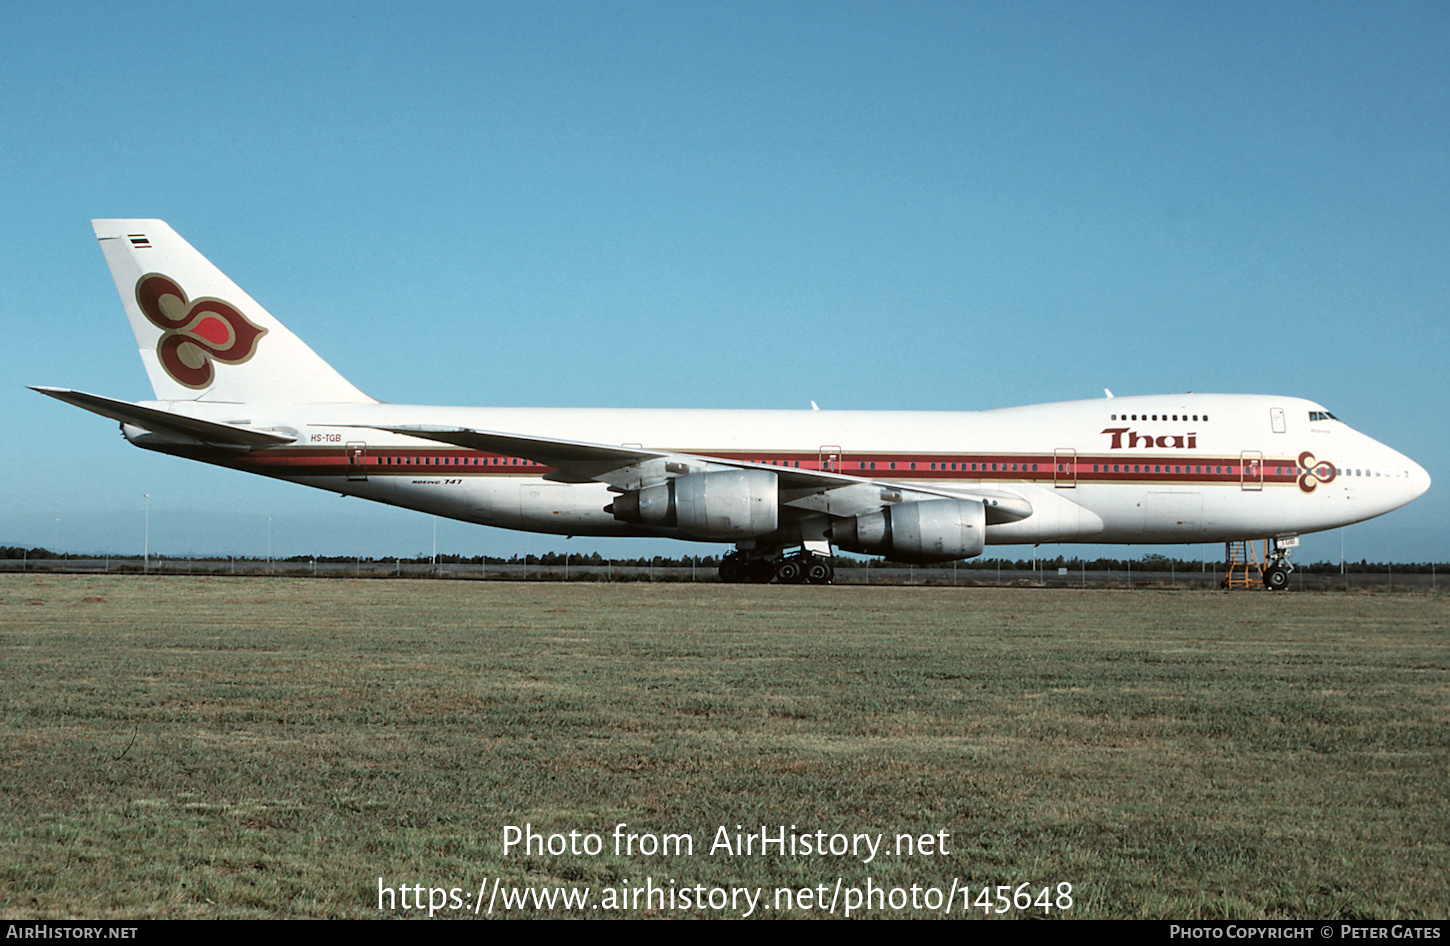 Aircraft Photo Of Hs Tgb Boeing 747 2d7b Thai Airways International Airhistory Net